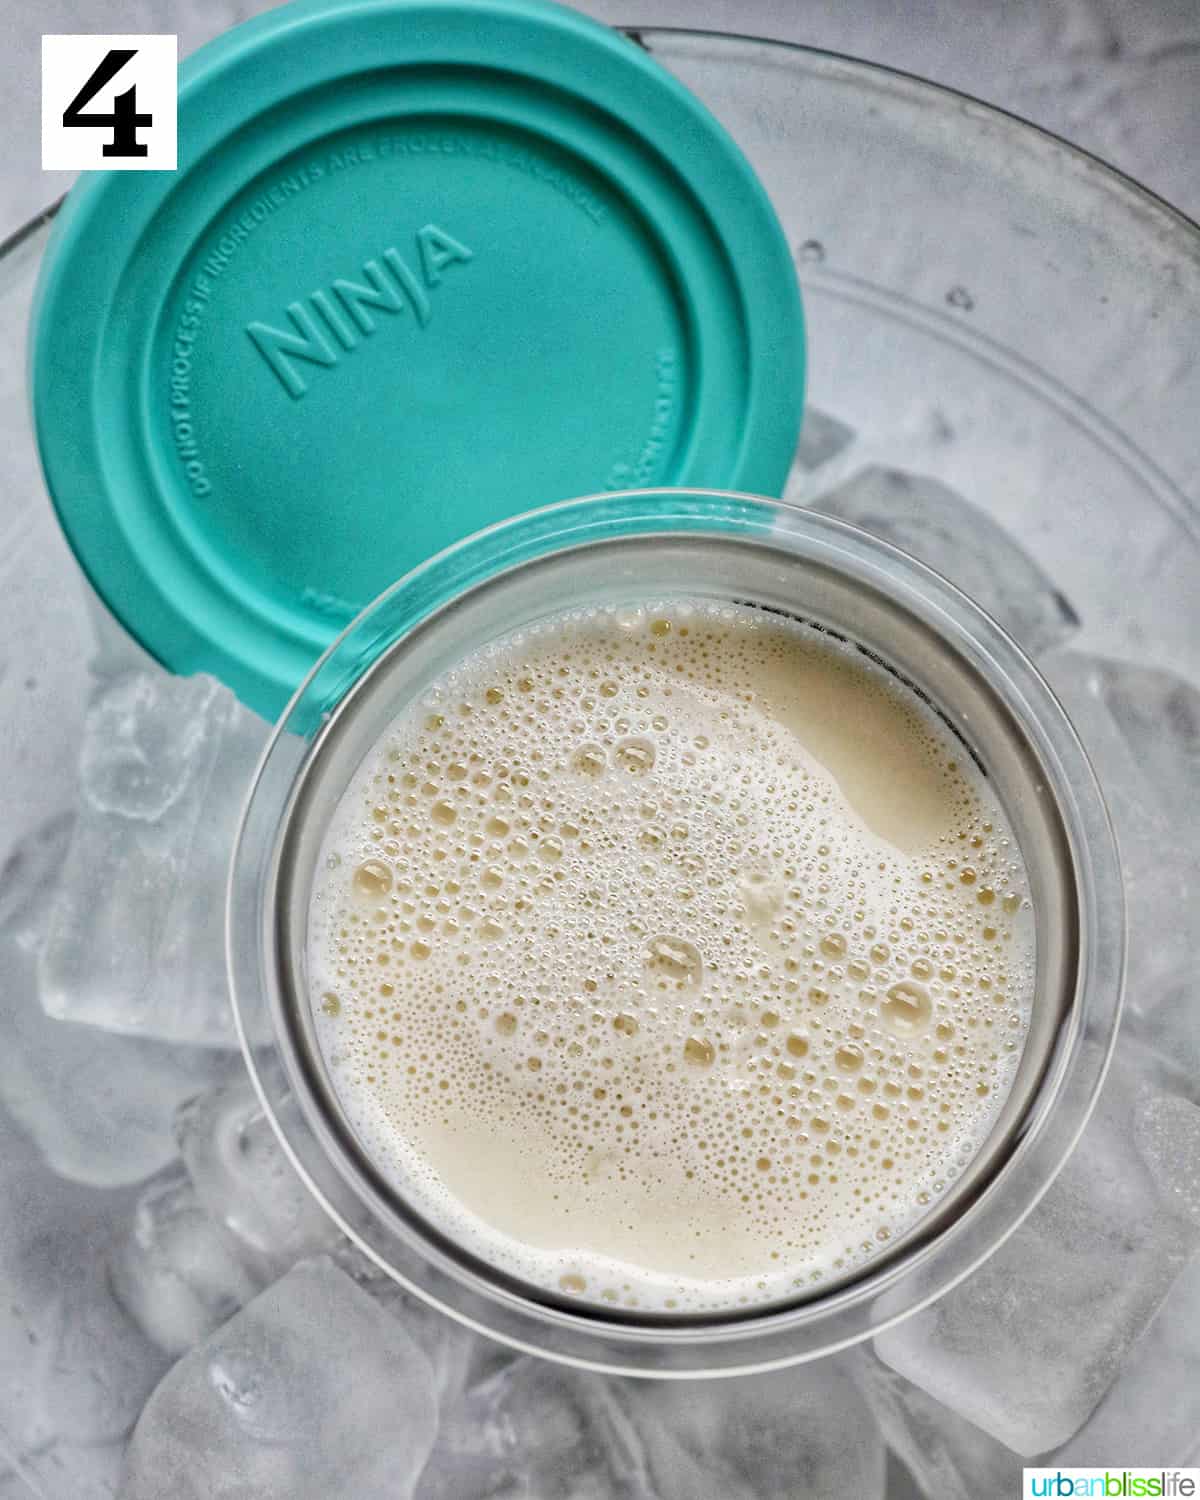 Stracciatella ice cream mixture in a Ninja Creami pint container in an ice bath.